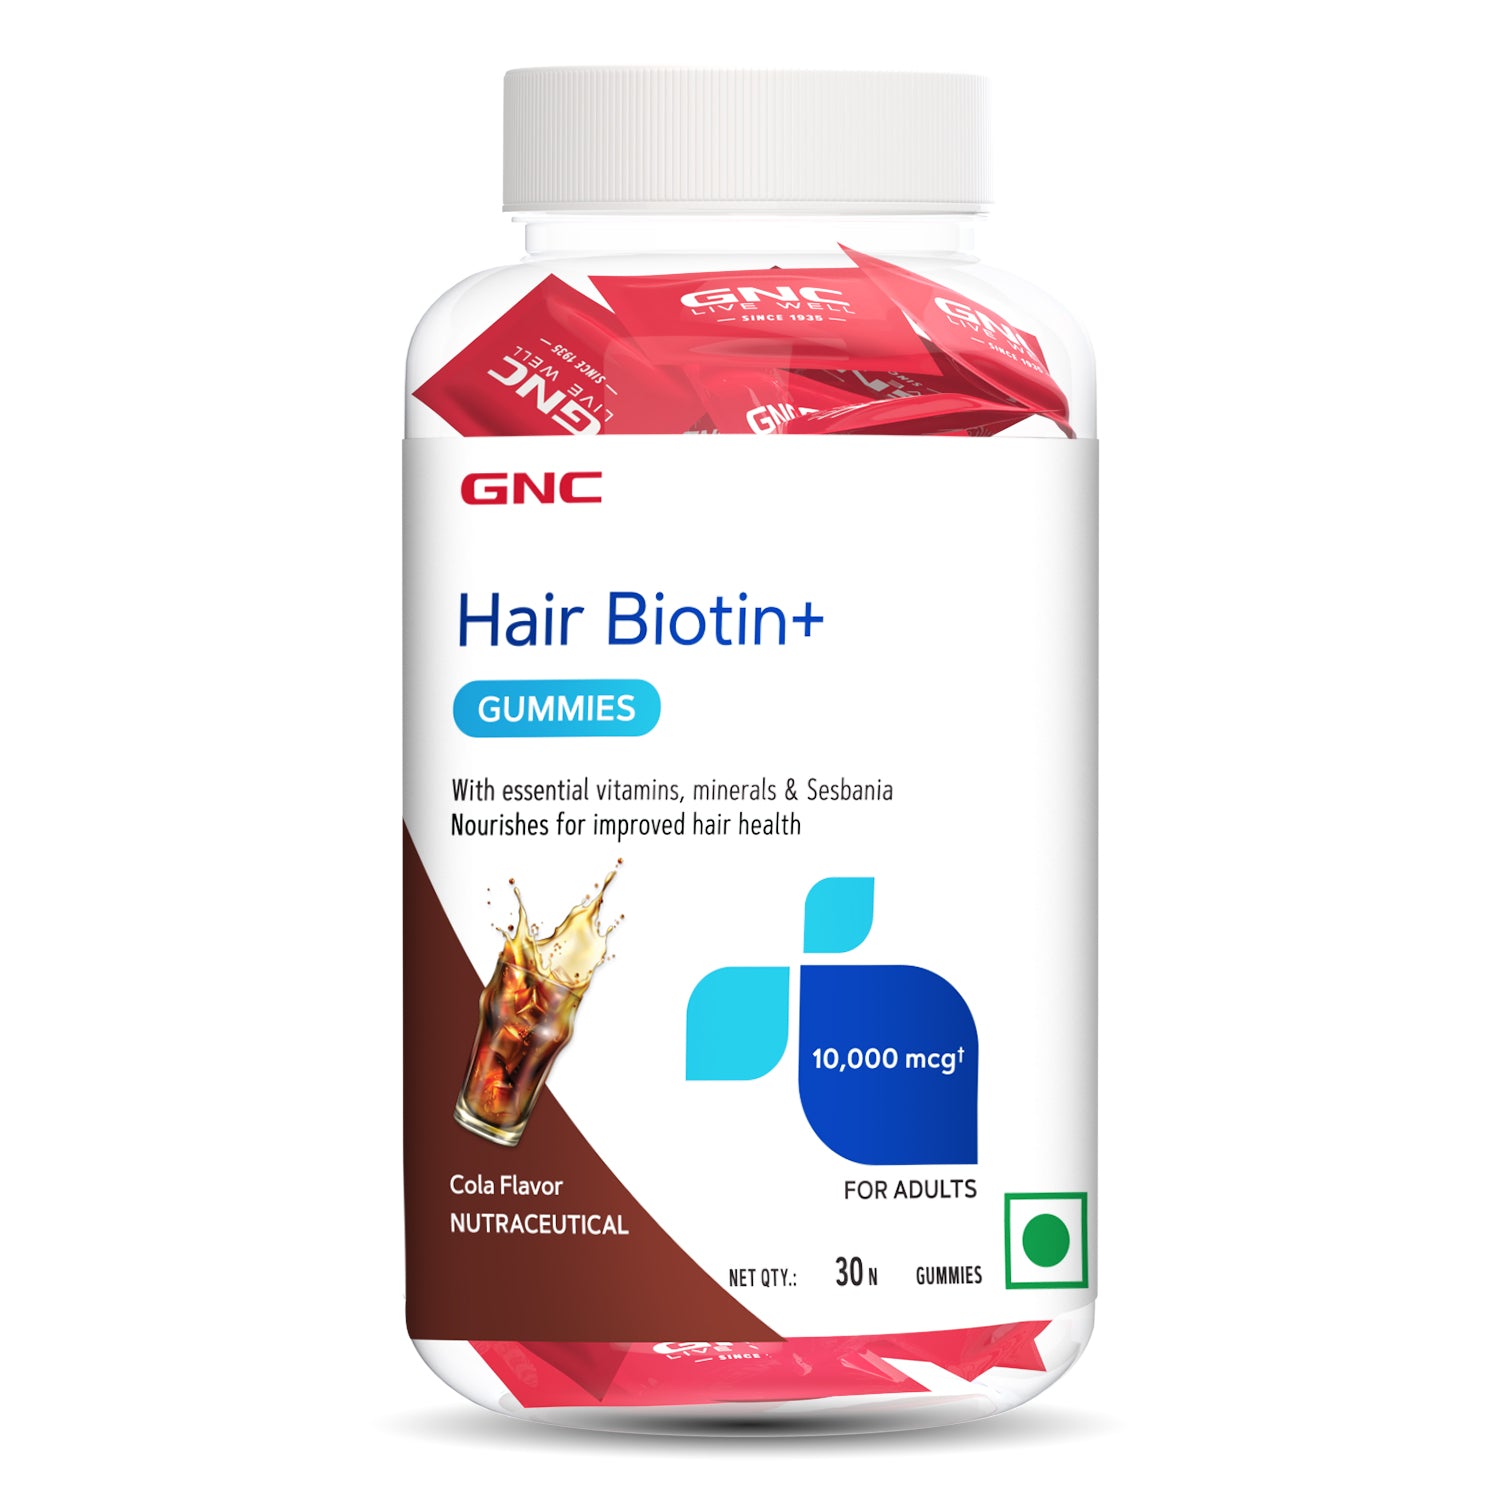 Hair Biotin+ Gummies - With 100% RDA Biotin, 10,000 mcg Sesbania & Other Vitamins & Minerals